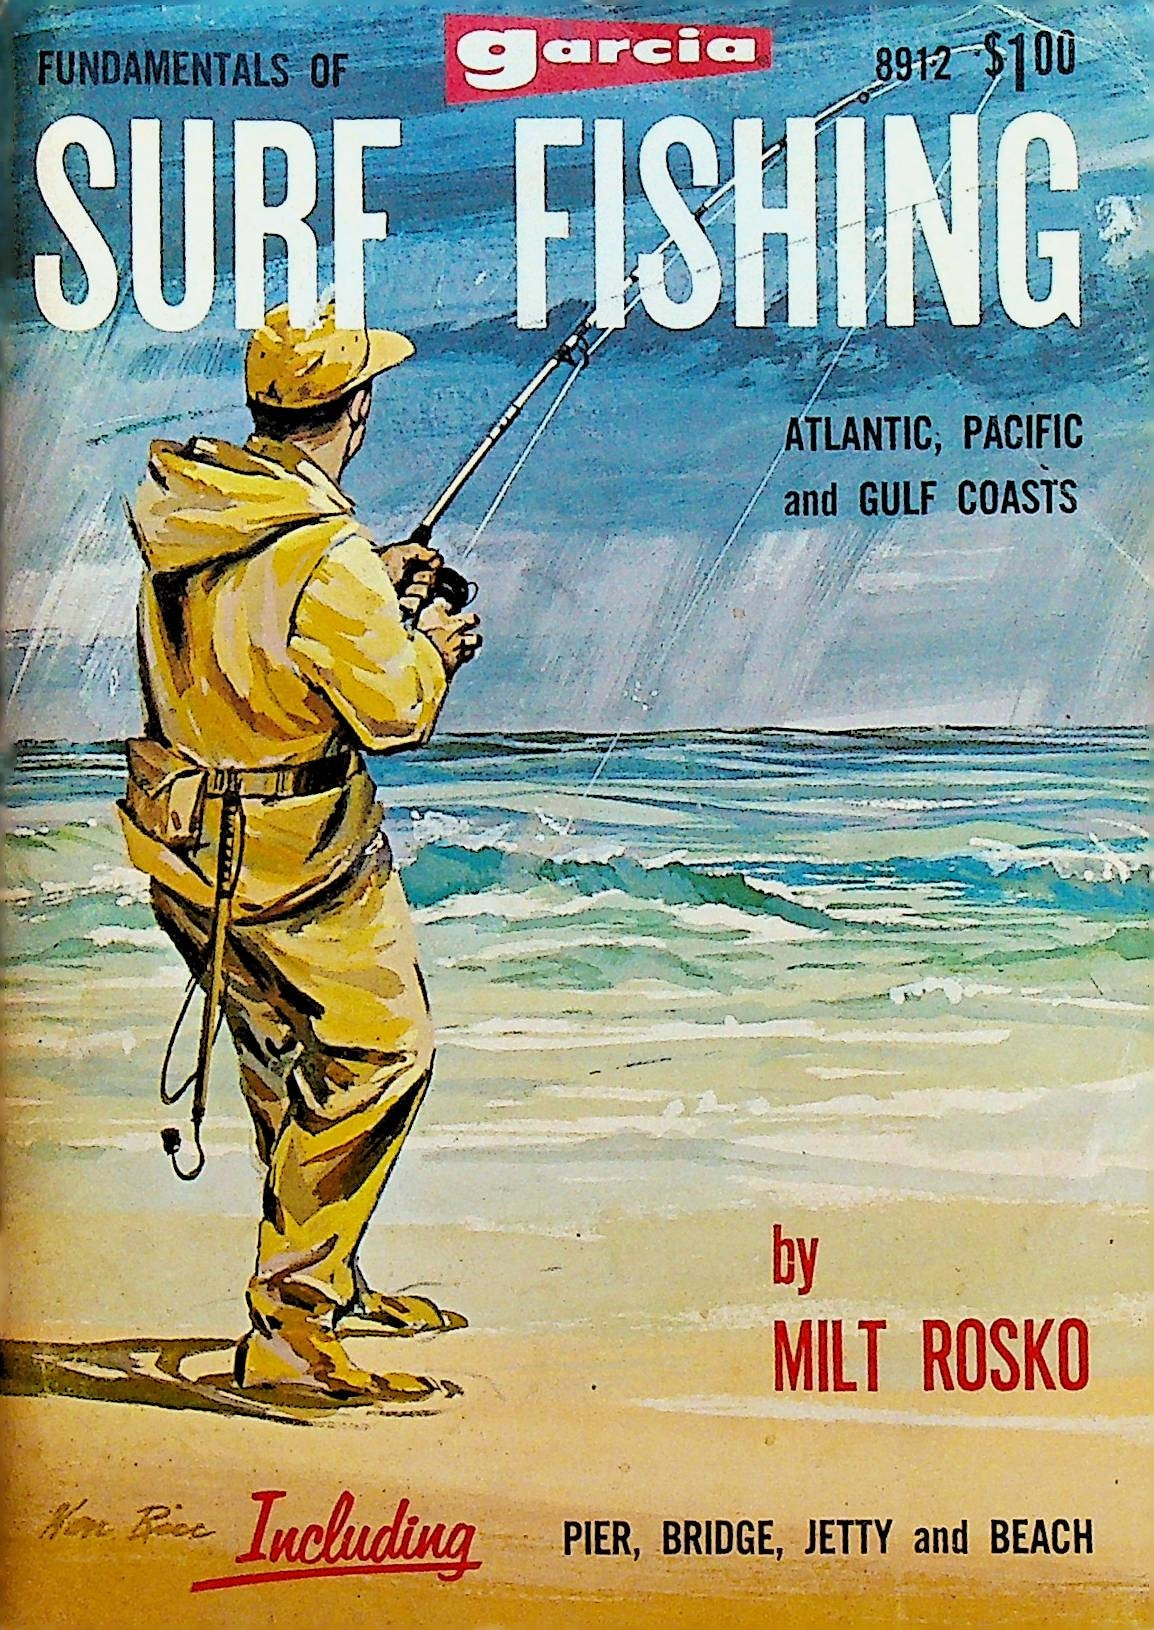 Garcia Corporation Surf Fishing Booklet by Milt Rosko 1968 